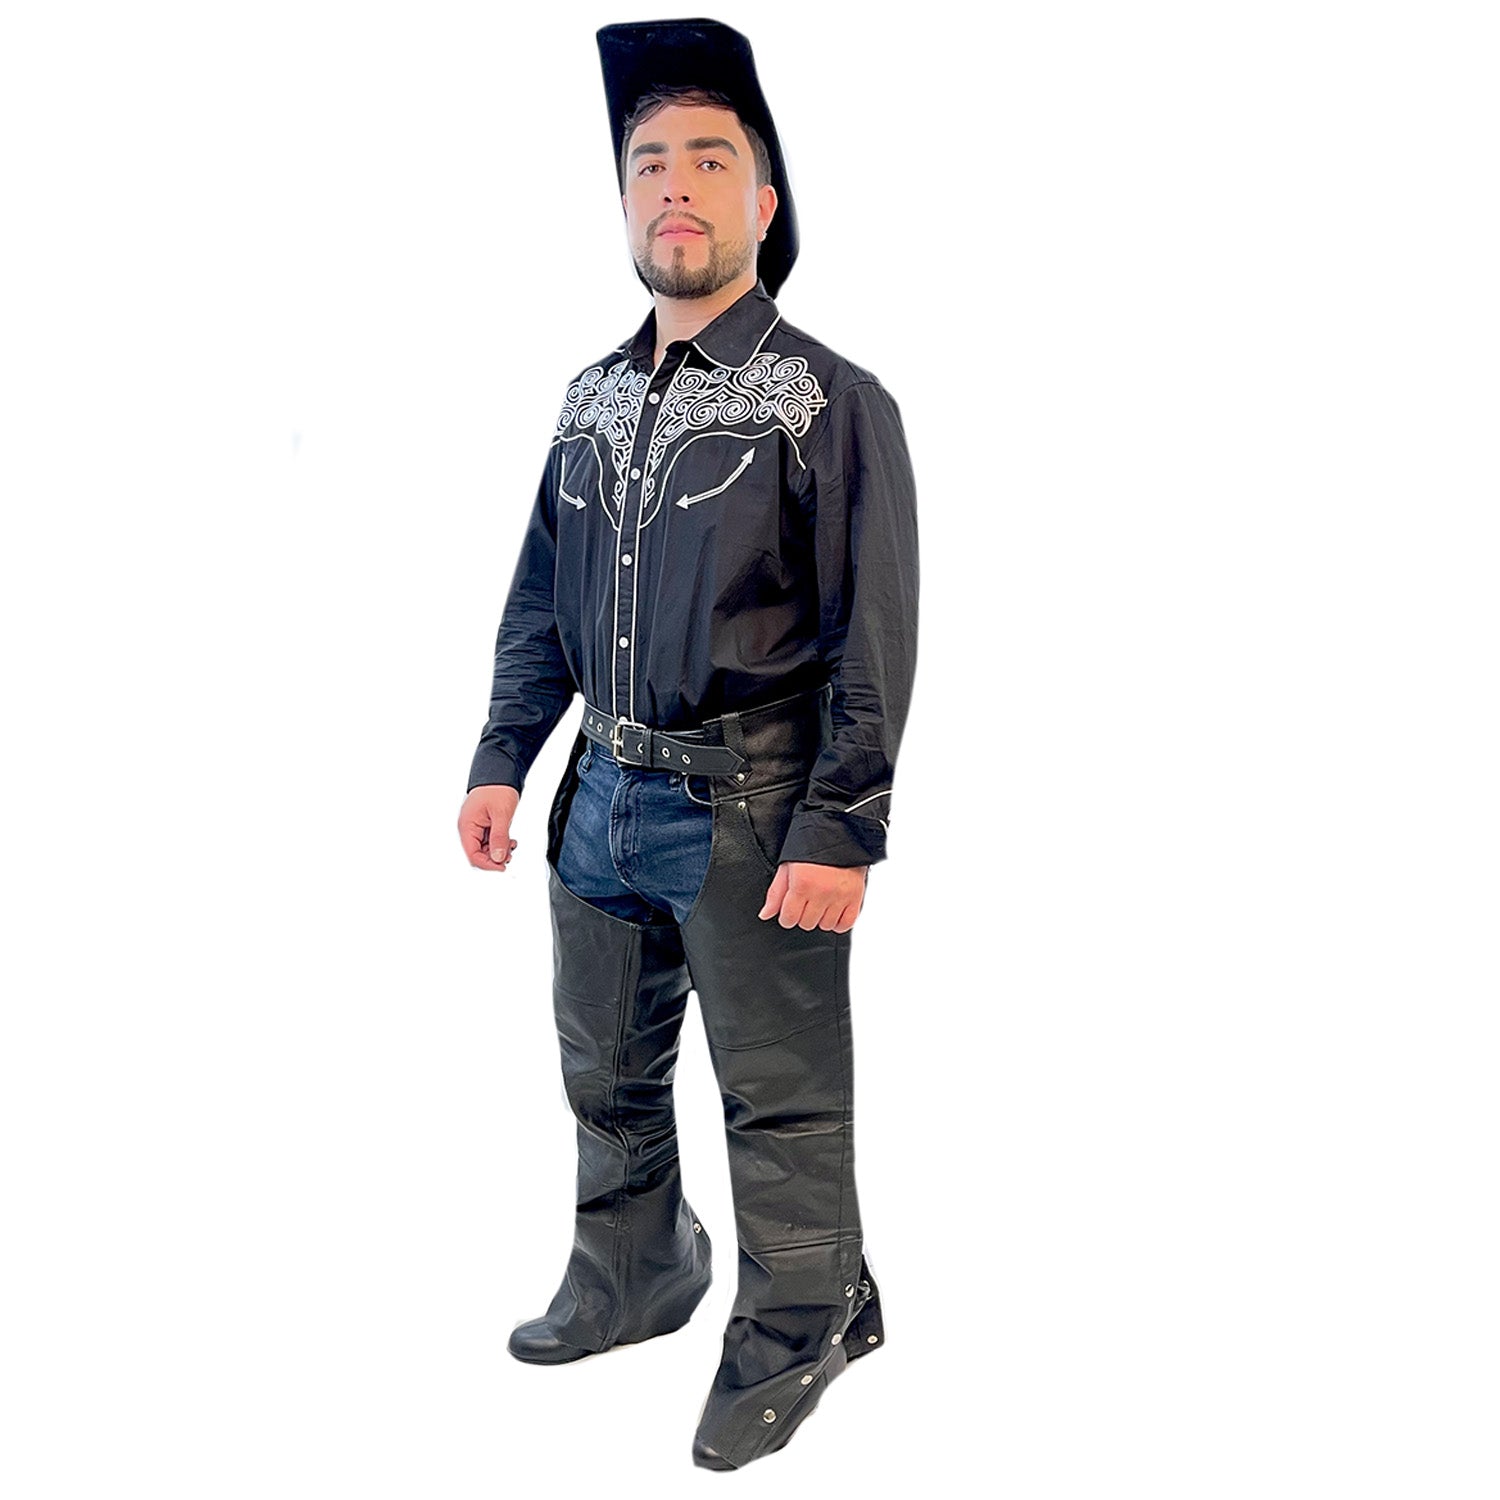 Exclusive Wild West Cowboy Adult Costume